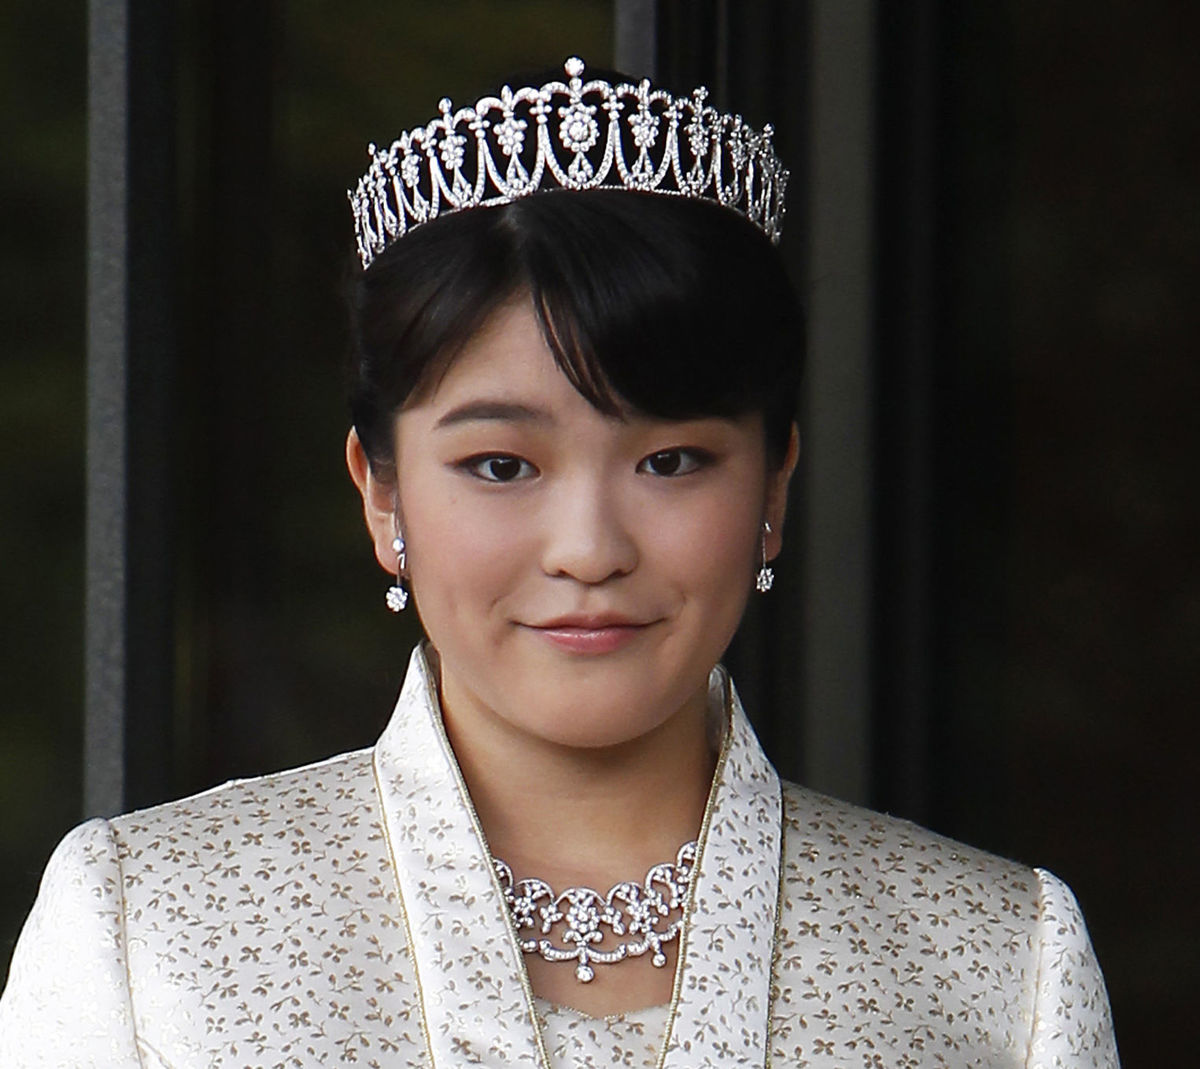 Japanese Princess Mako's wedding postponed until 2020